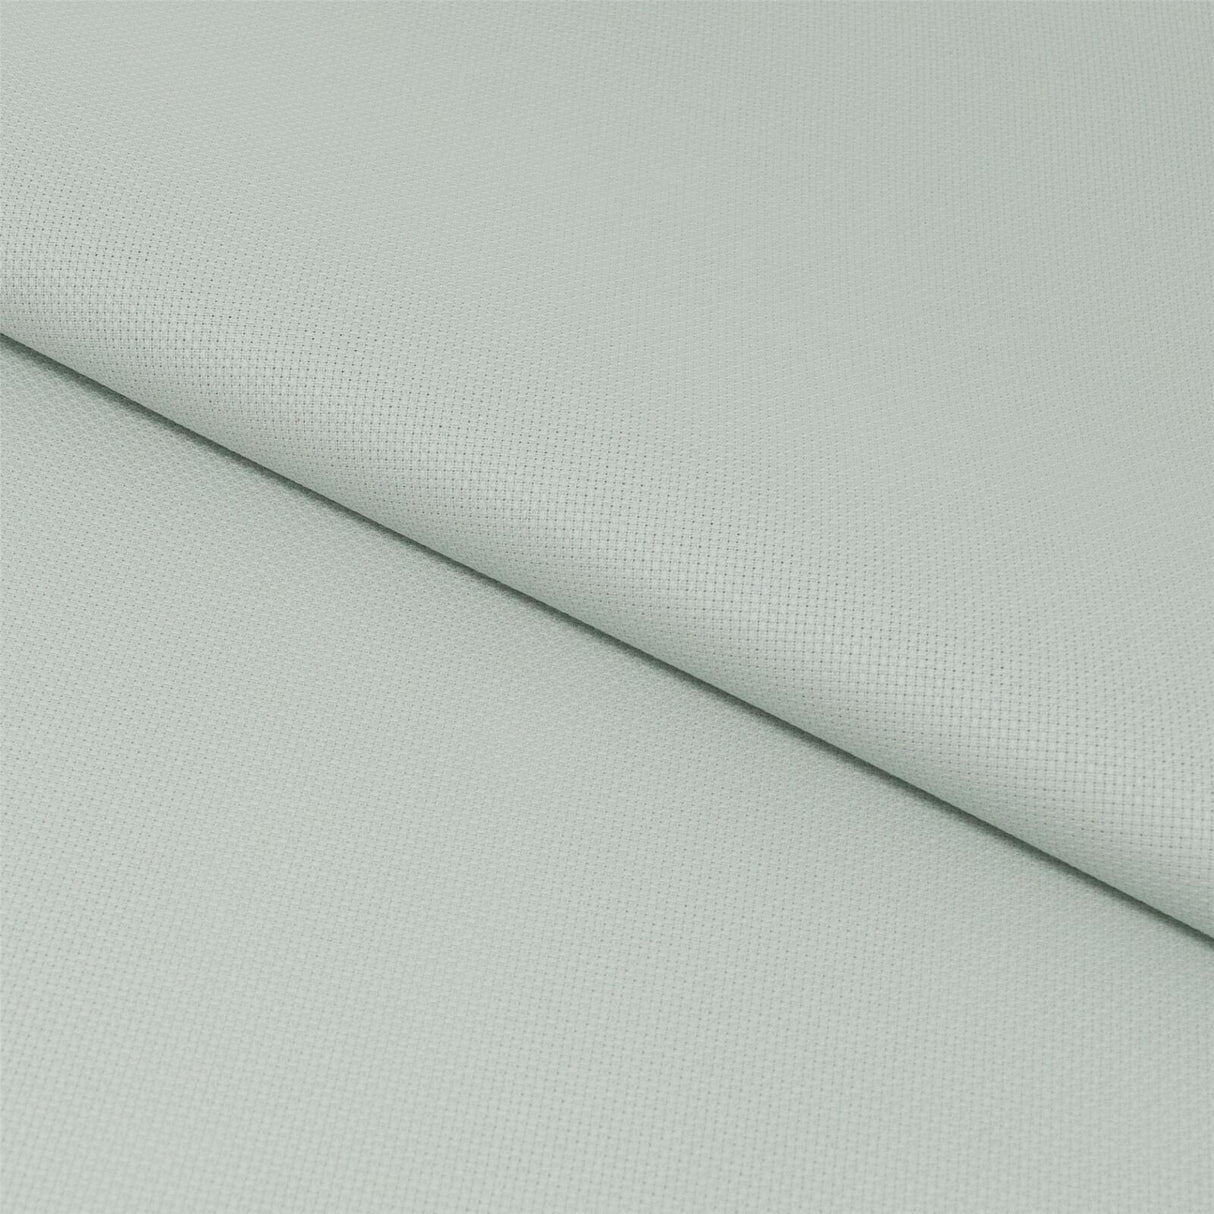 3706/718 Stern-Aida fabric 14 ct. Confederate Gray ZWEIGART for Cross Stitch